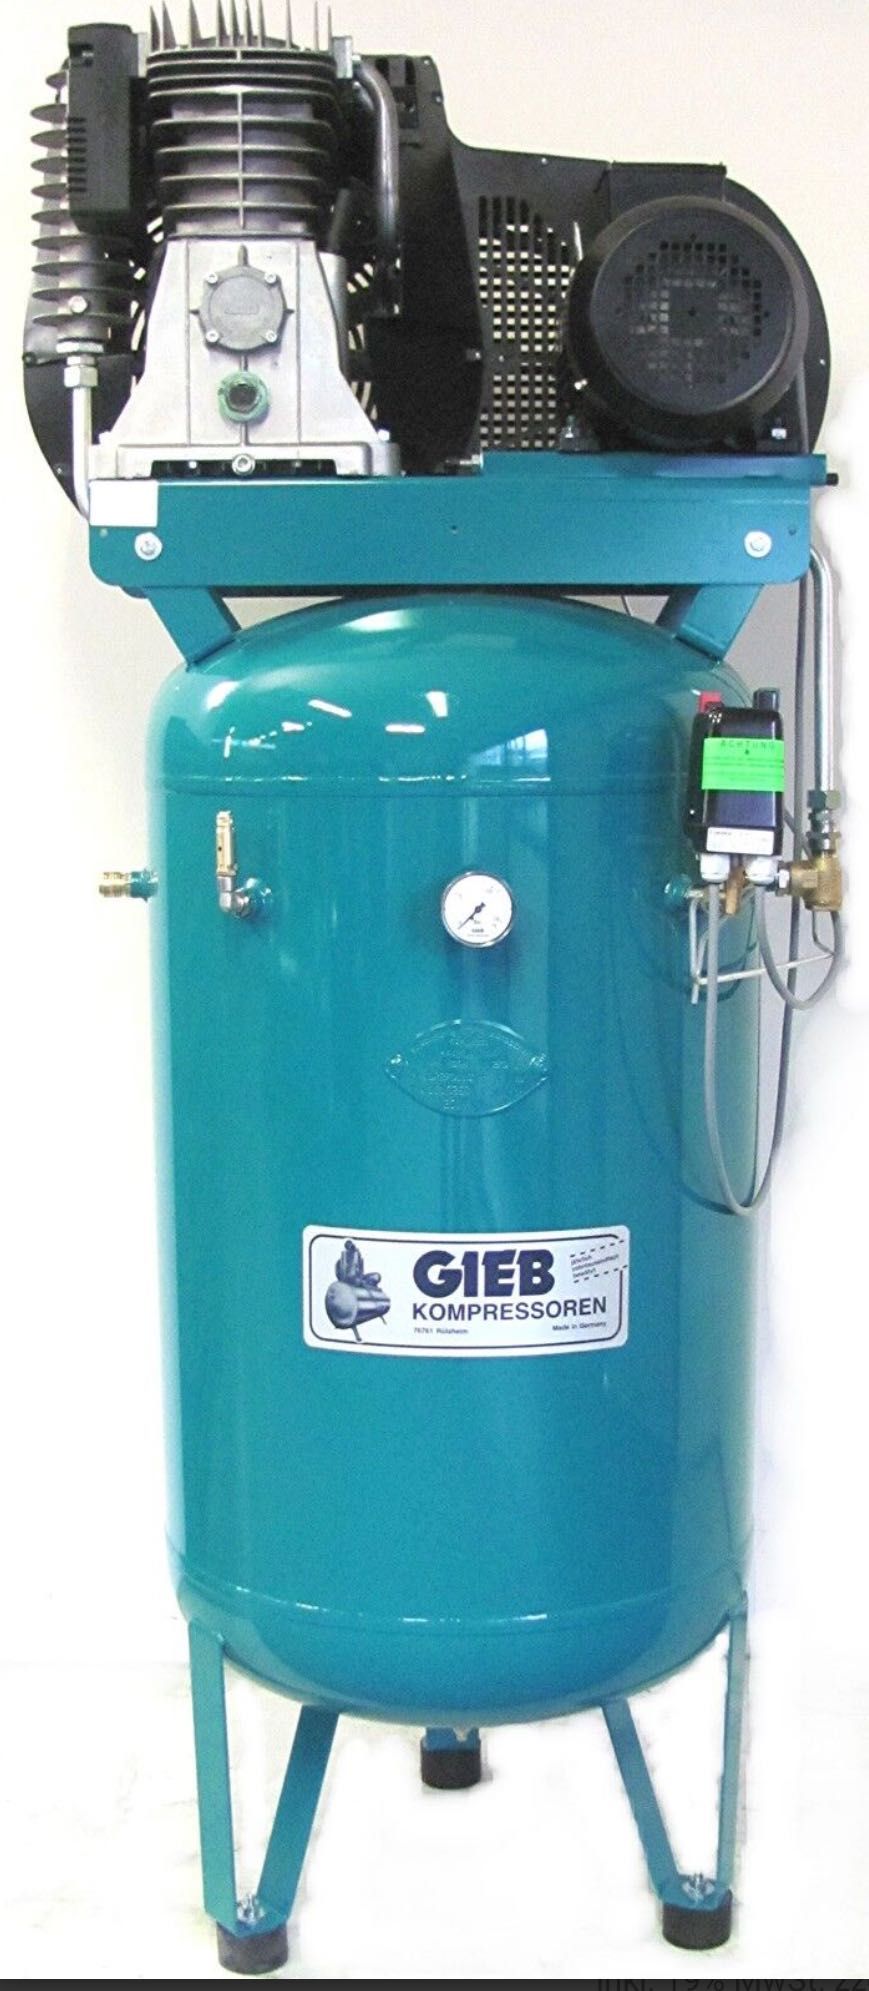 GIEB - Kompressor 850/270-11-stehend 5,5 KW
400 V